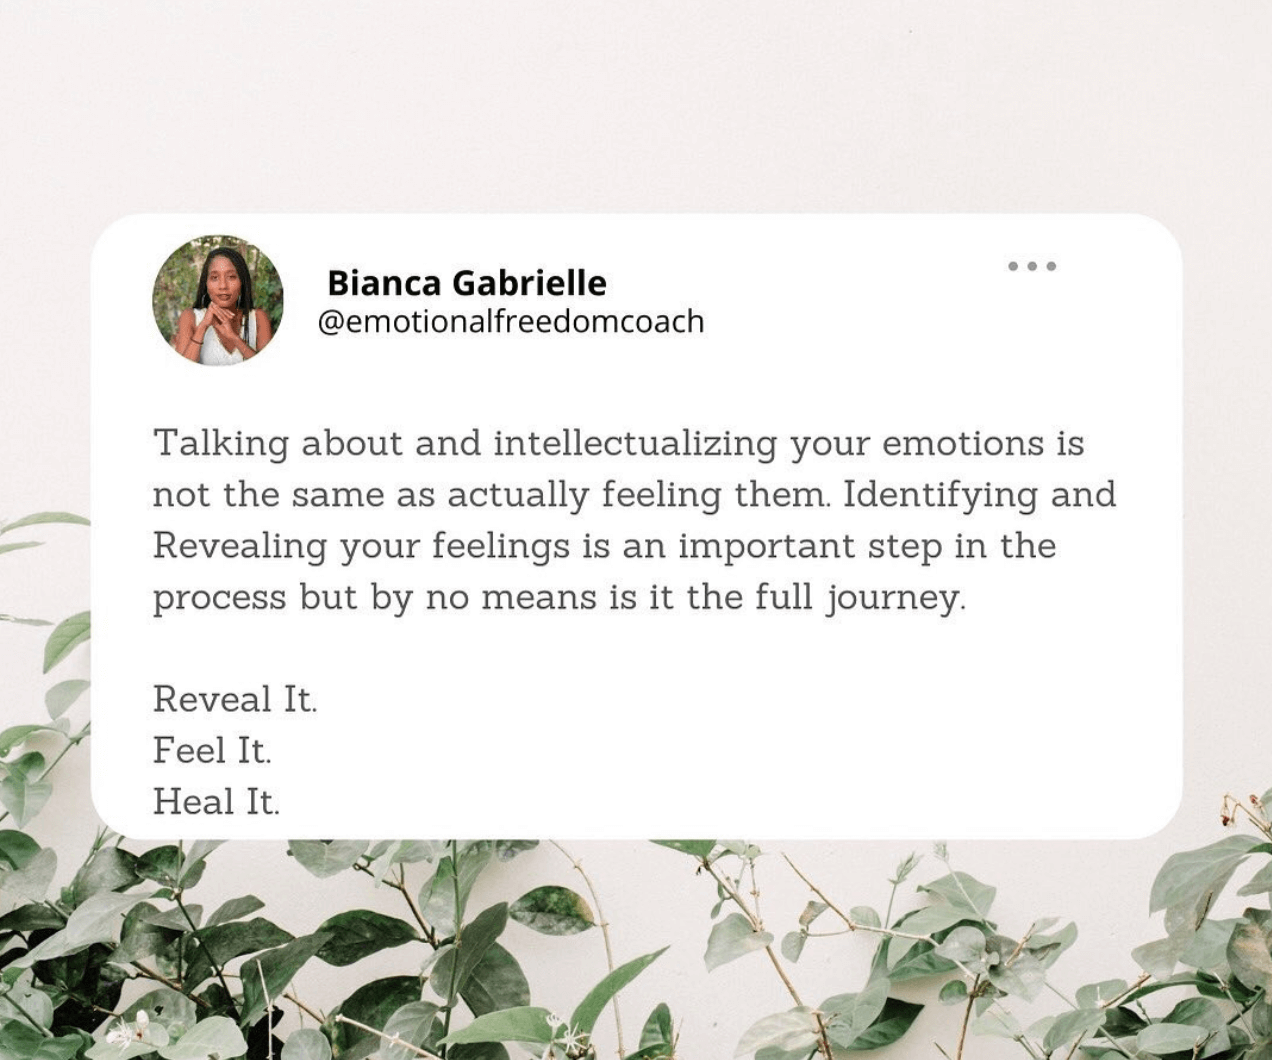 Bianca Gabrielle of @emotionalfreedomcoach